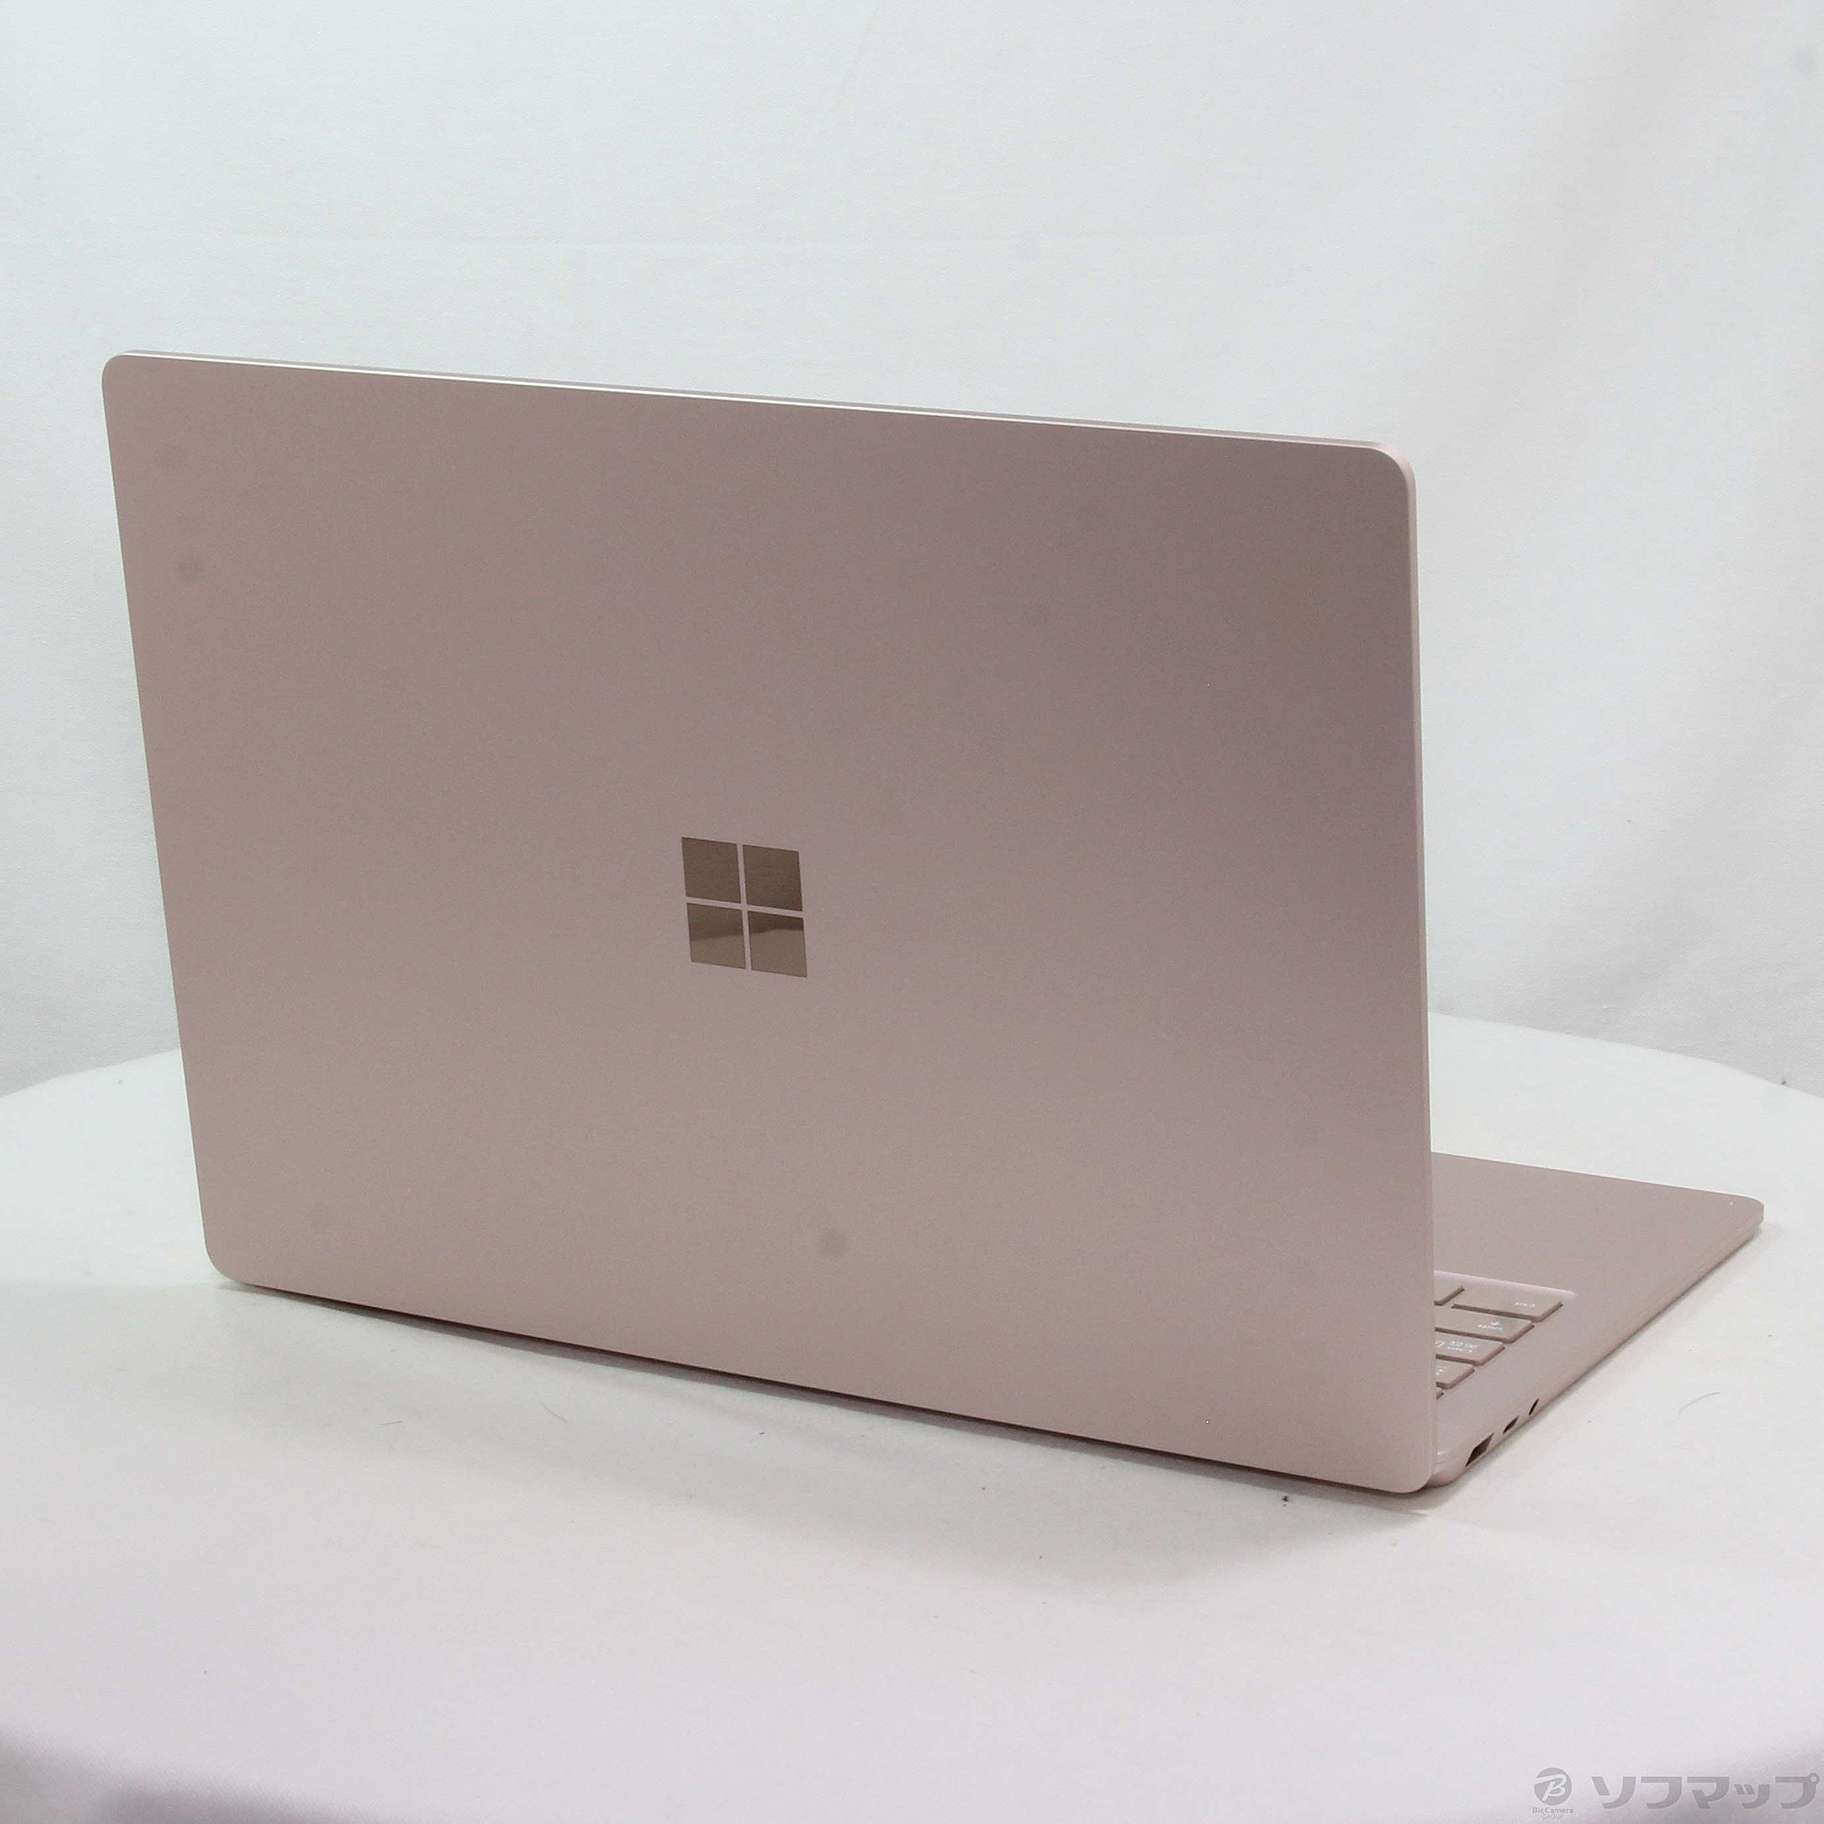 展示品] Surface Laptop 4[Core i5/8GB/SSD512GB]5C1-00064|no邮购是